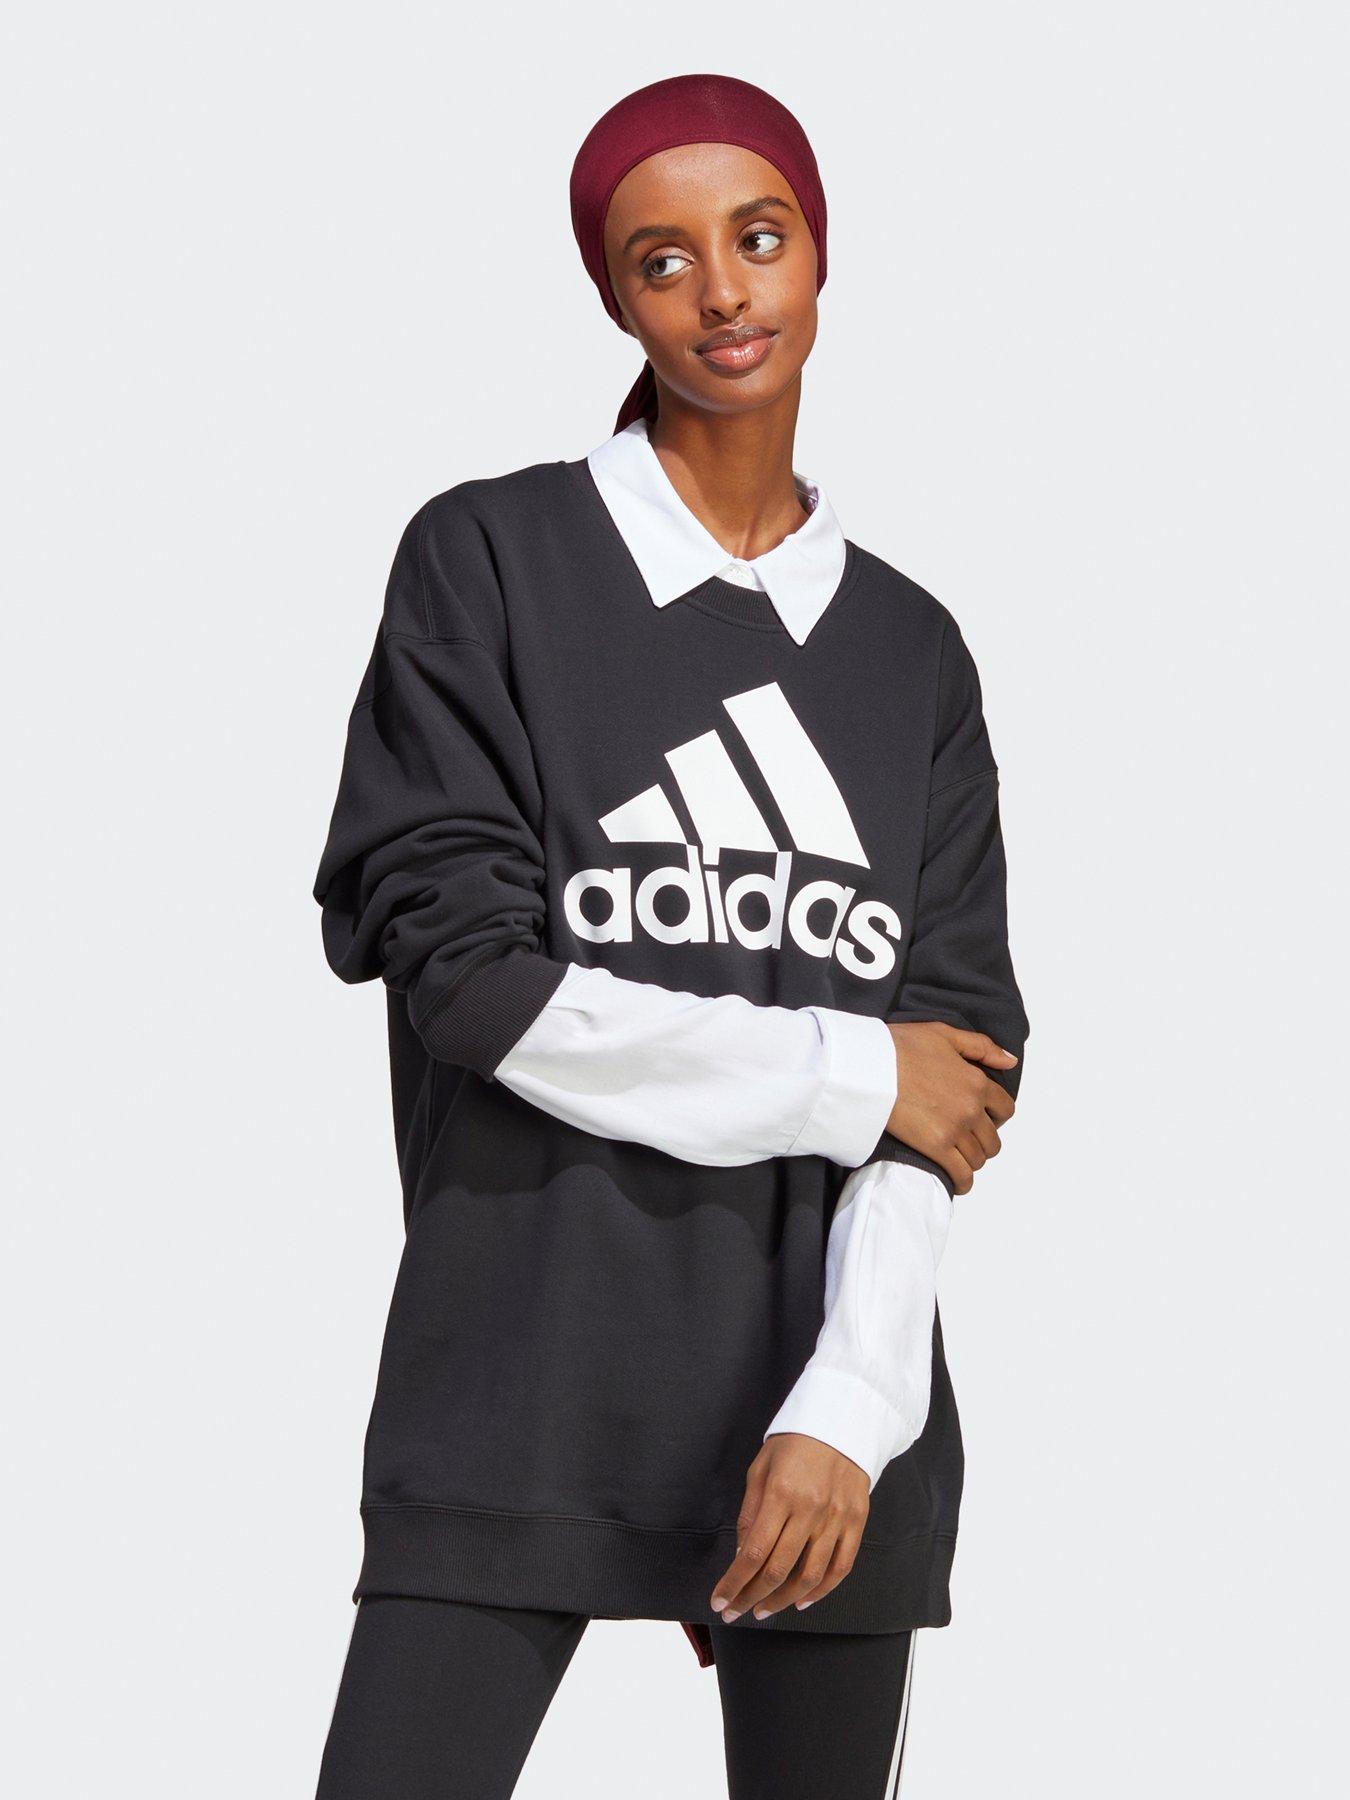 Buy adidas Originals 80s Aerobics Slouchy Sweatshirt from Next Ireland